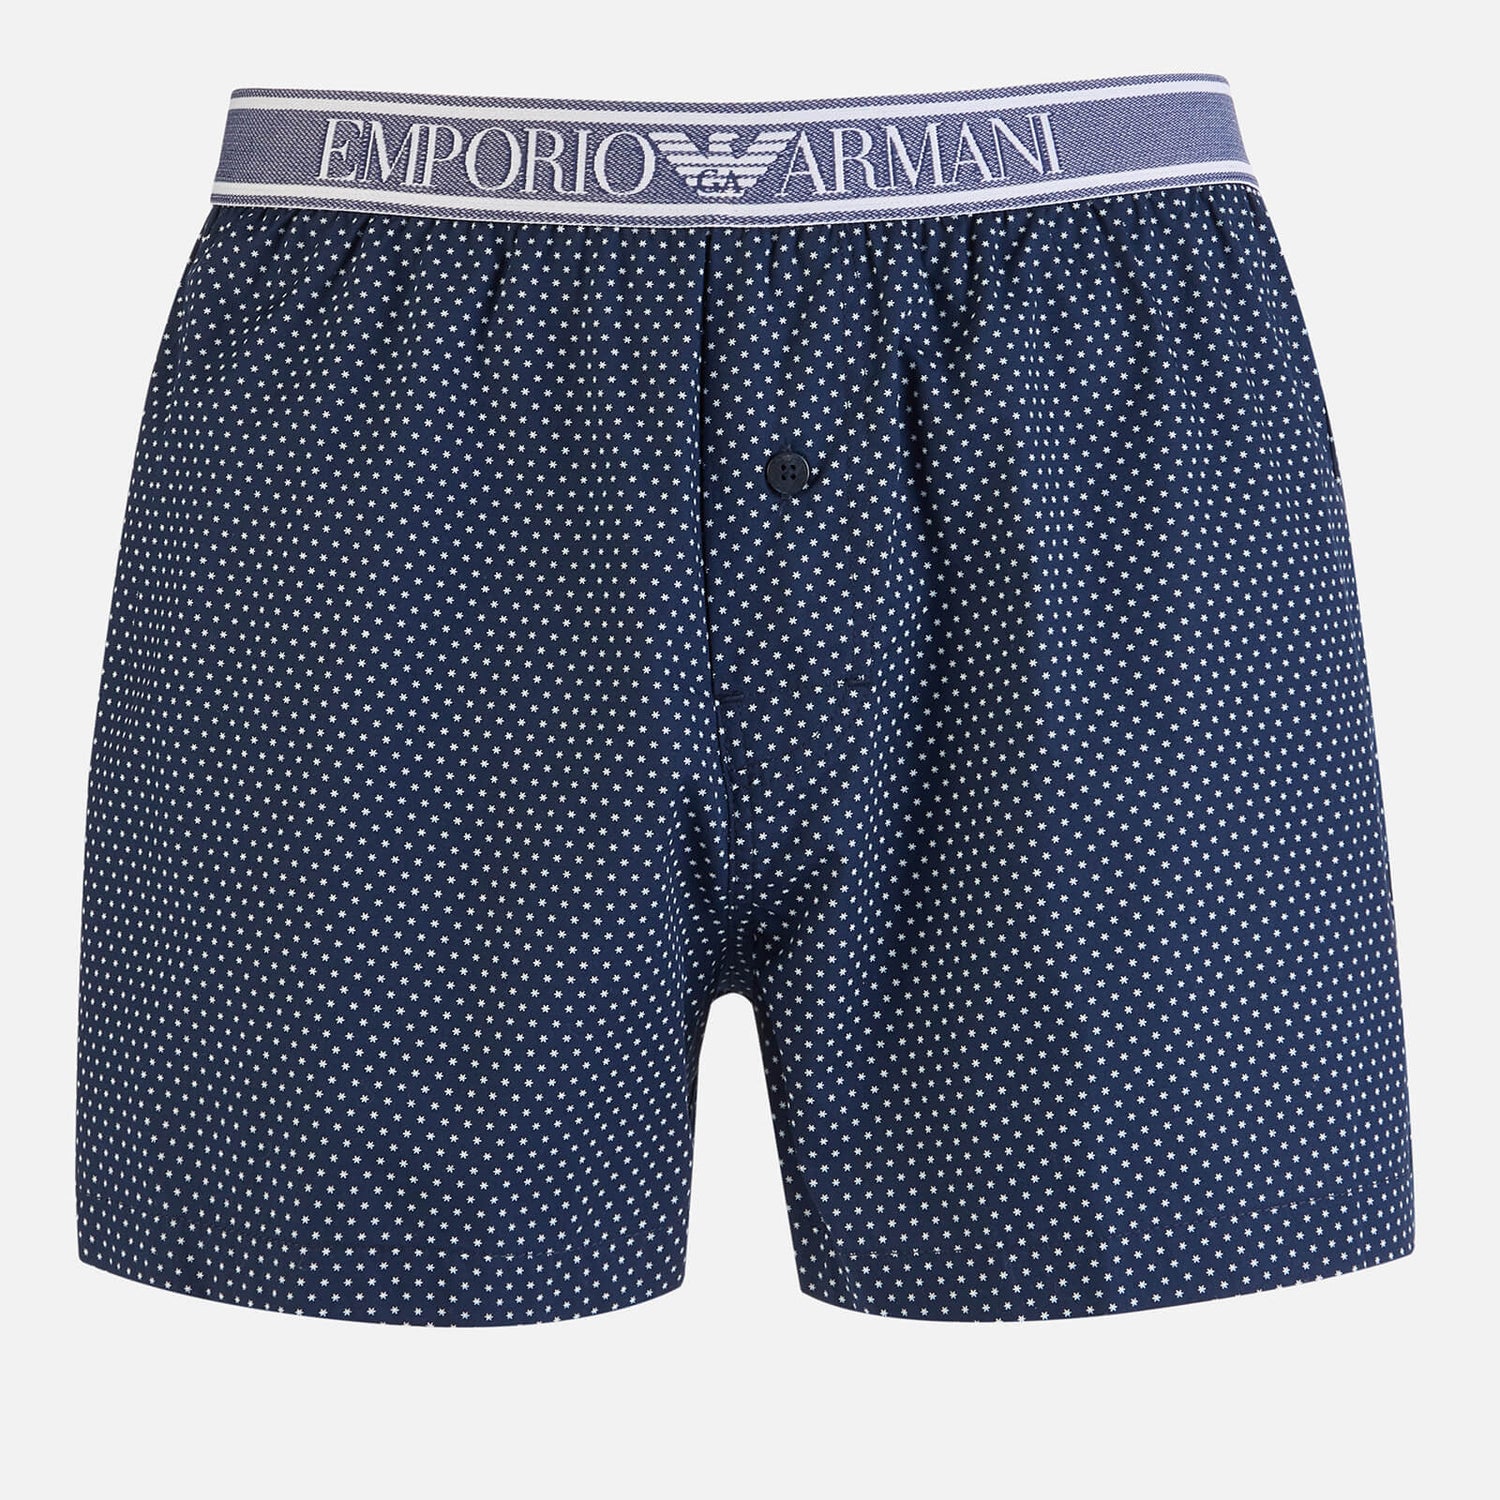 Emporio Armani Men's Yard Dyed Woven Pyjama Boxers - Micropatten - S